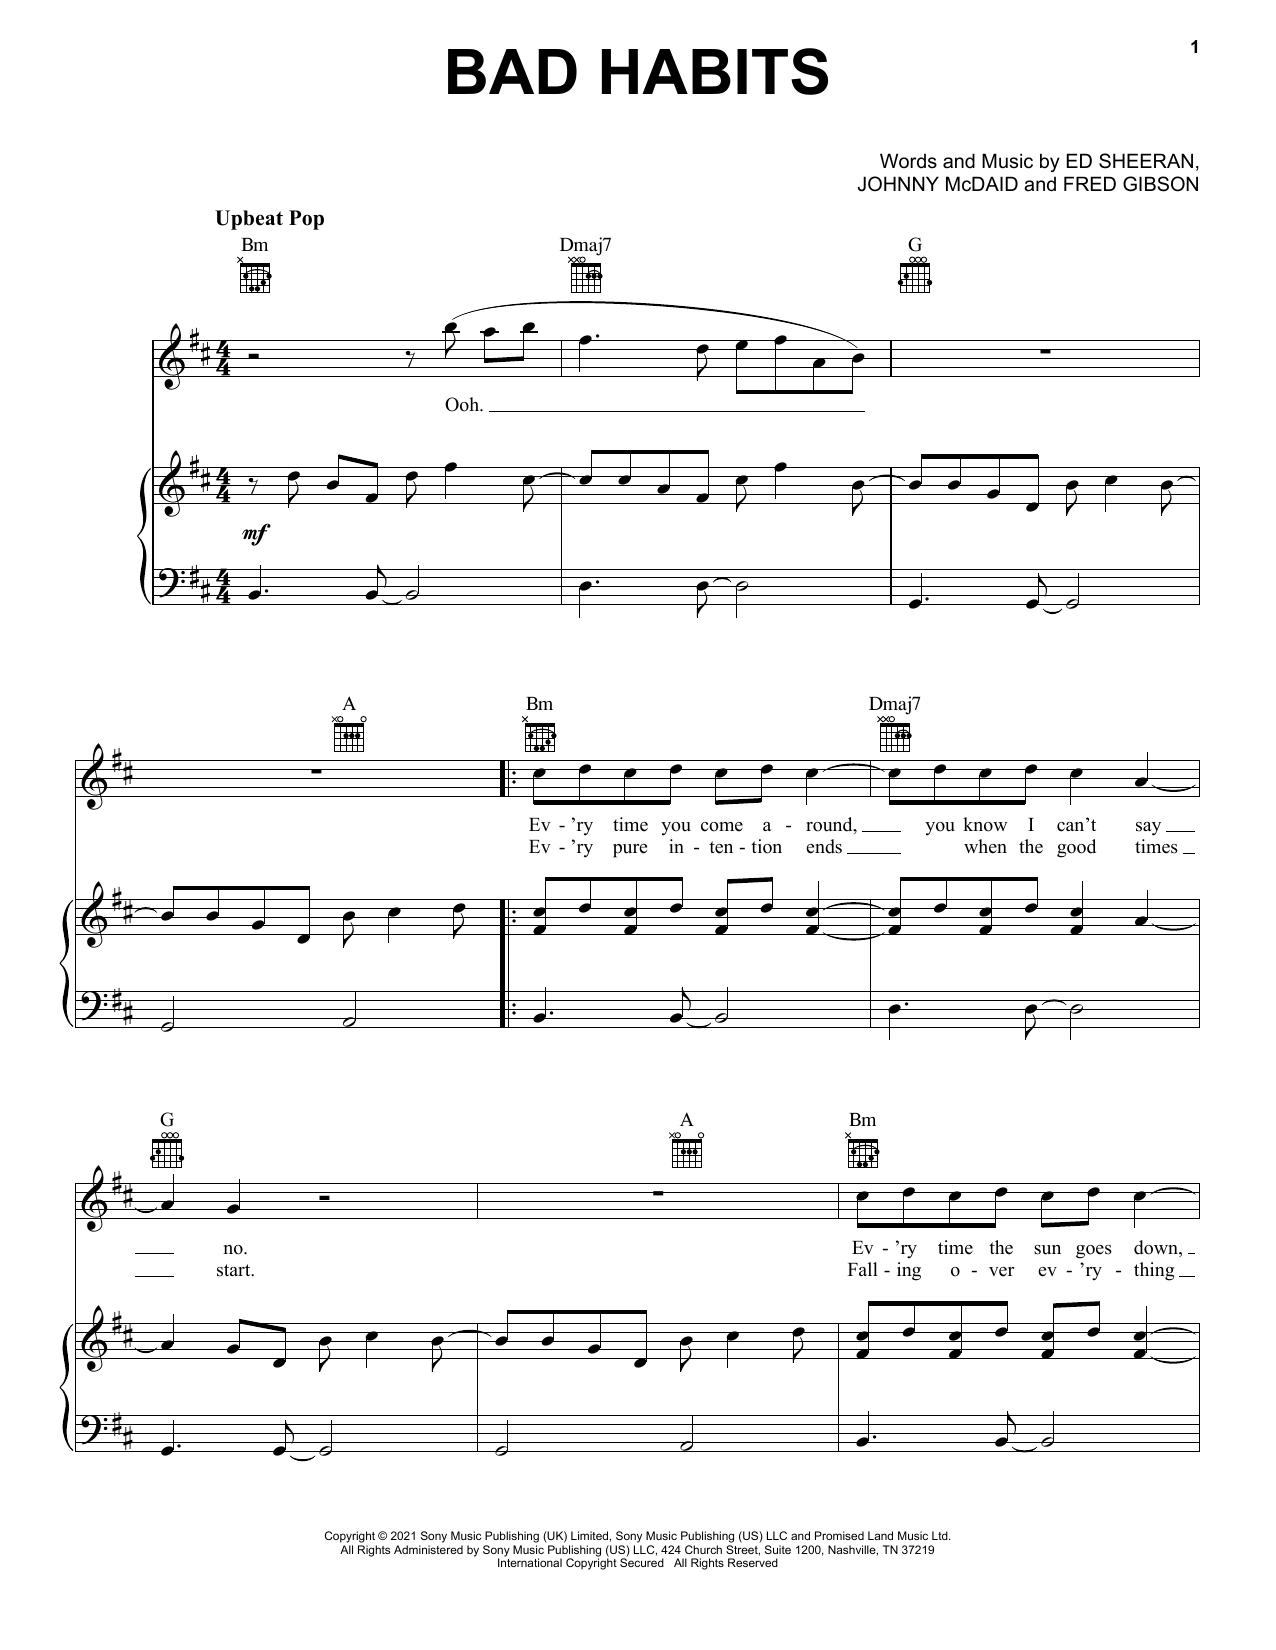 Ed Sheeran Bad Habits Sheet Music Notes & Chords for Cello Duet - Download or Print PDF